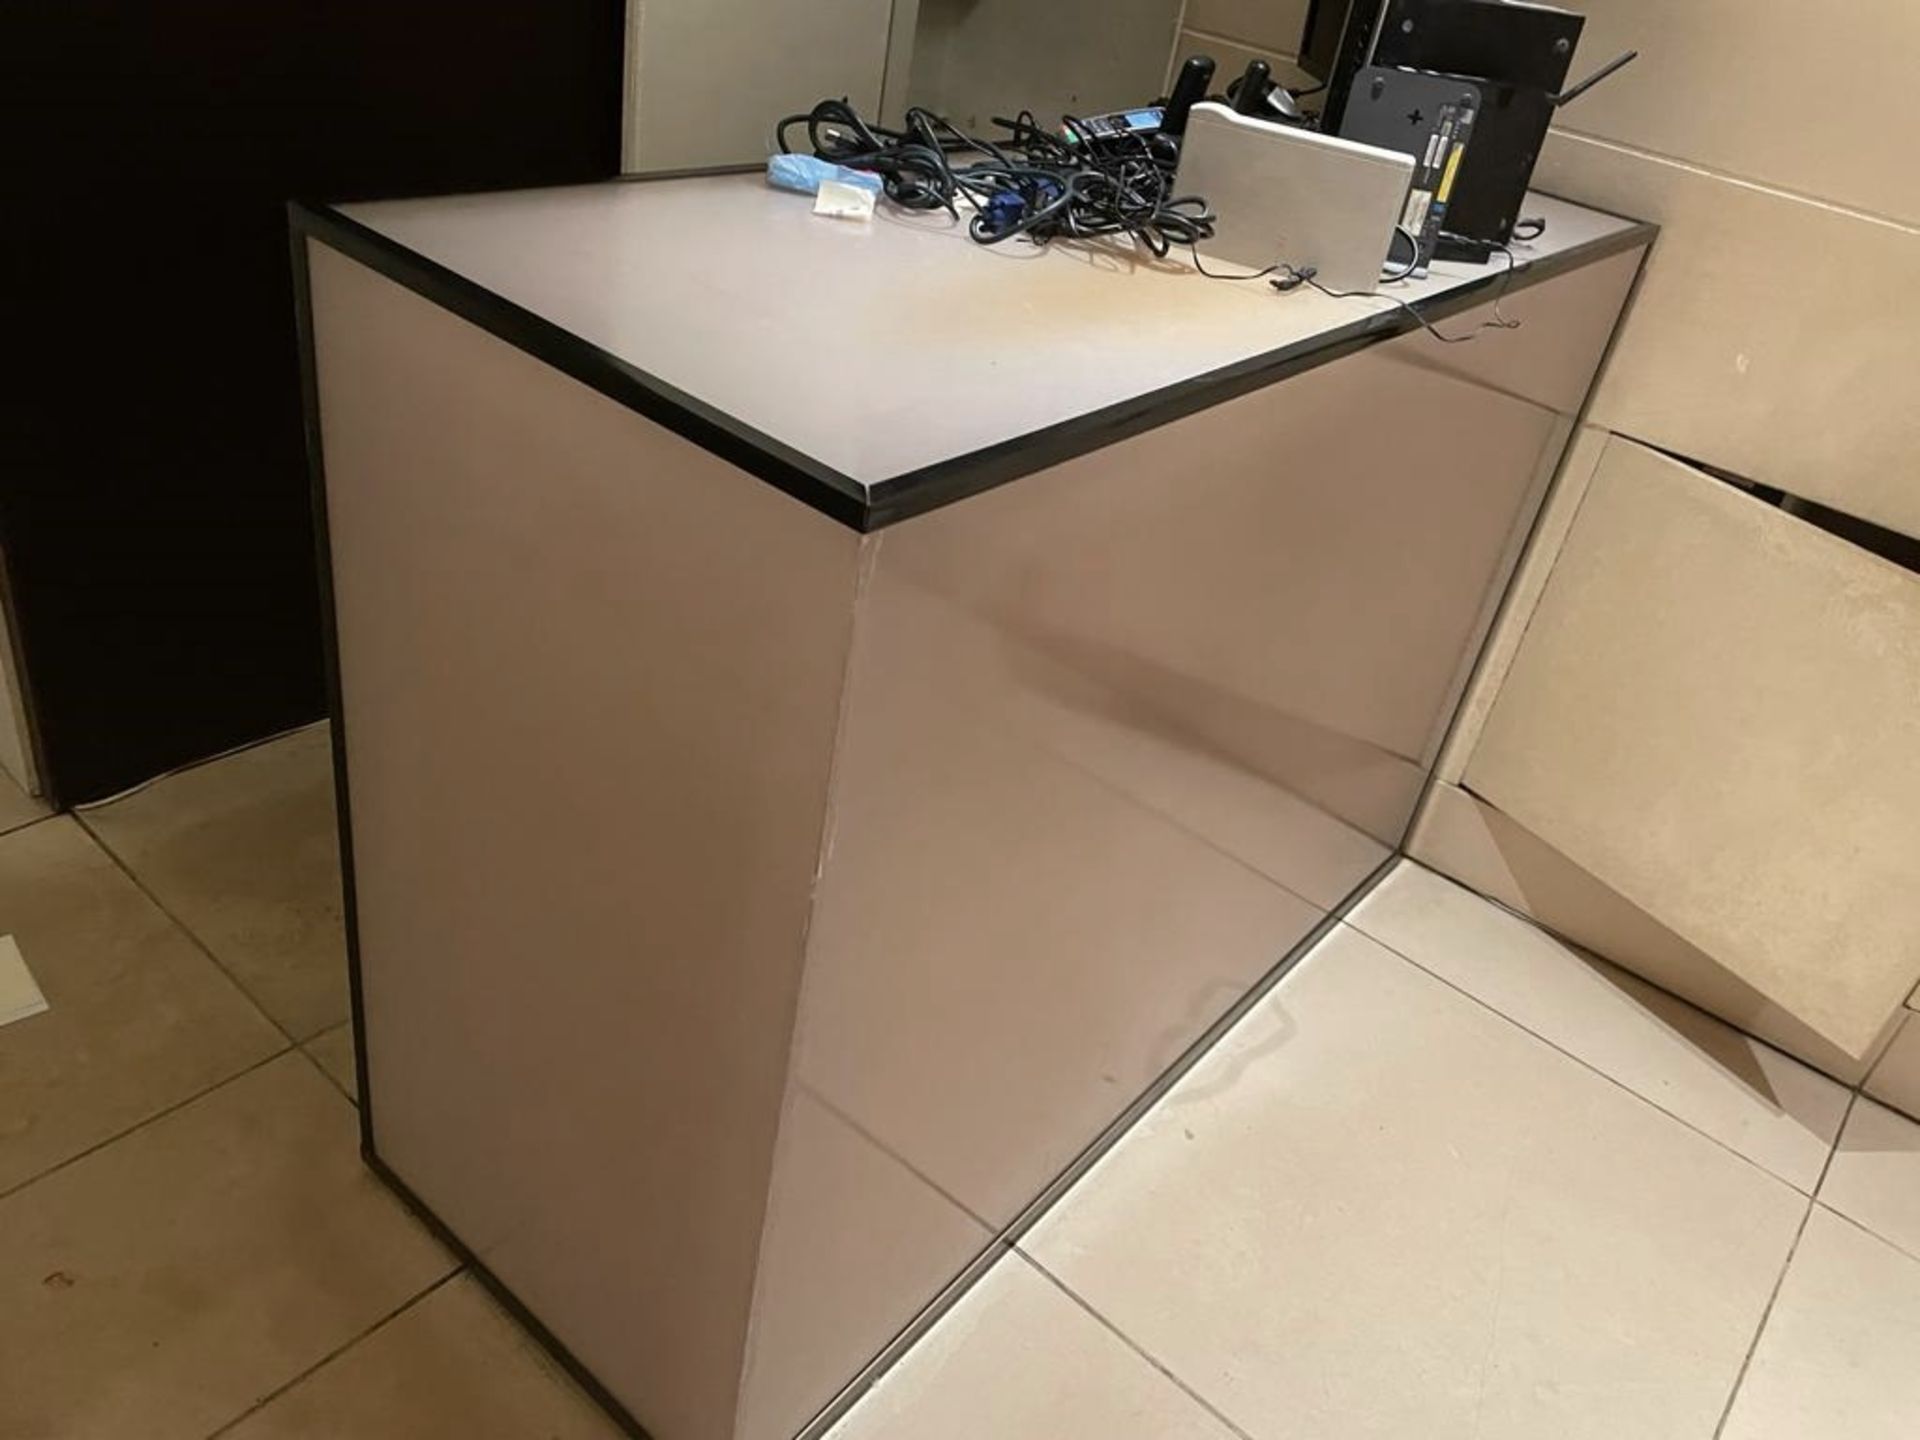 1 x Reception Desk With Ceiling Suspended Light Shelf - Desk Dimensions: W160 x D60.5 x H112cm - Image 6 of 6